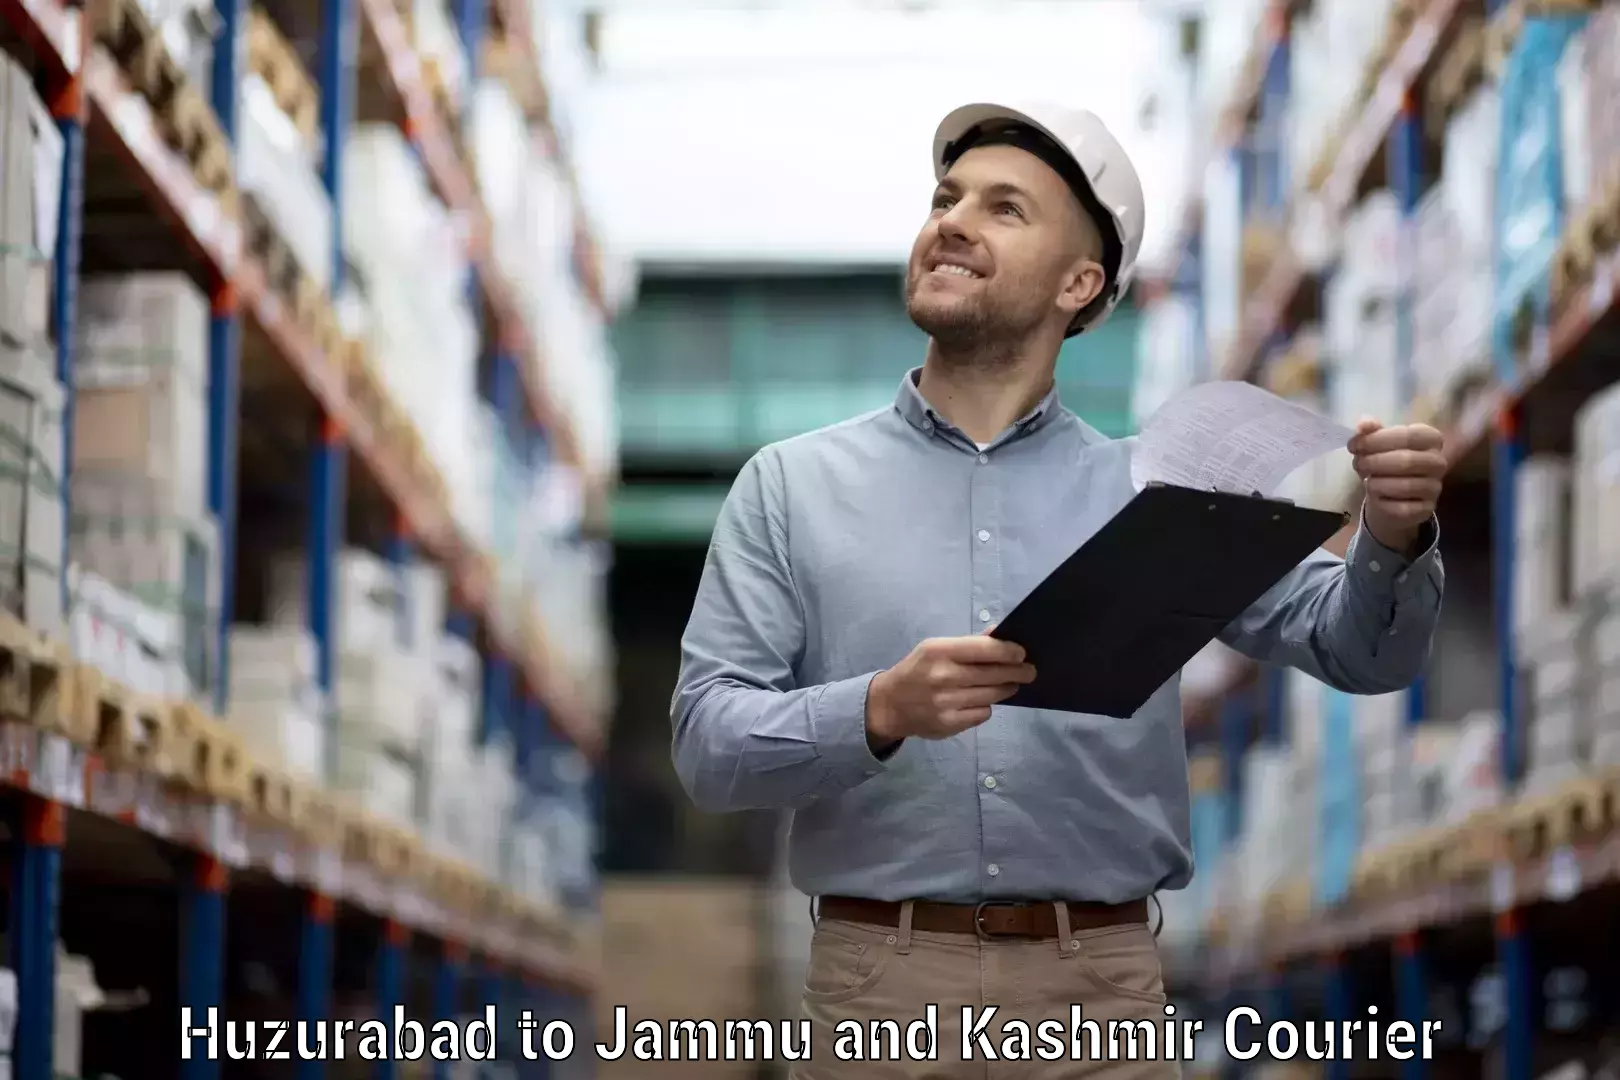 User-friendly delivery service Huzurabad to Jakh